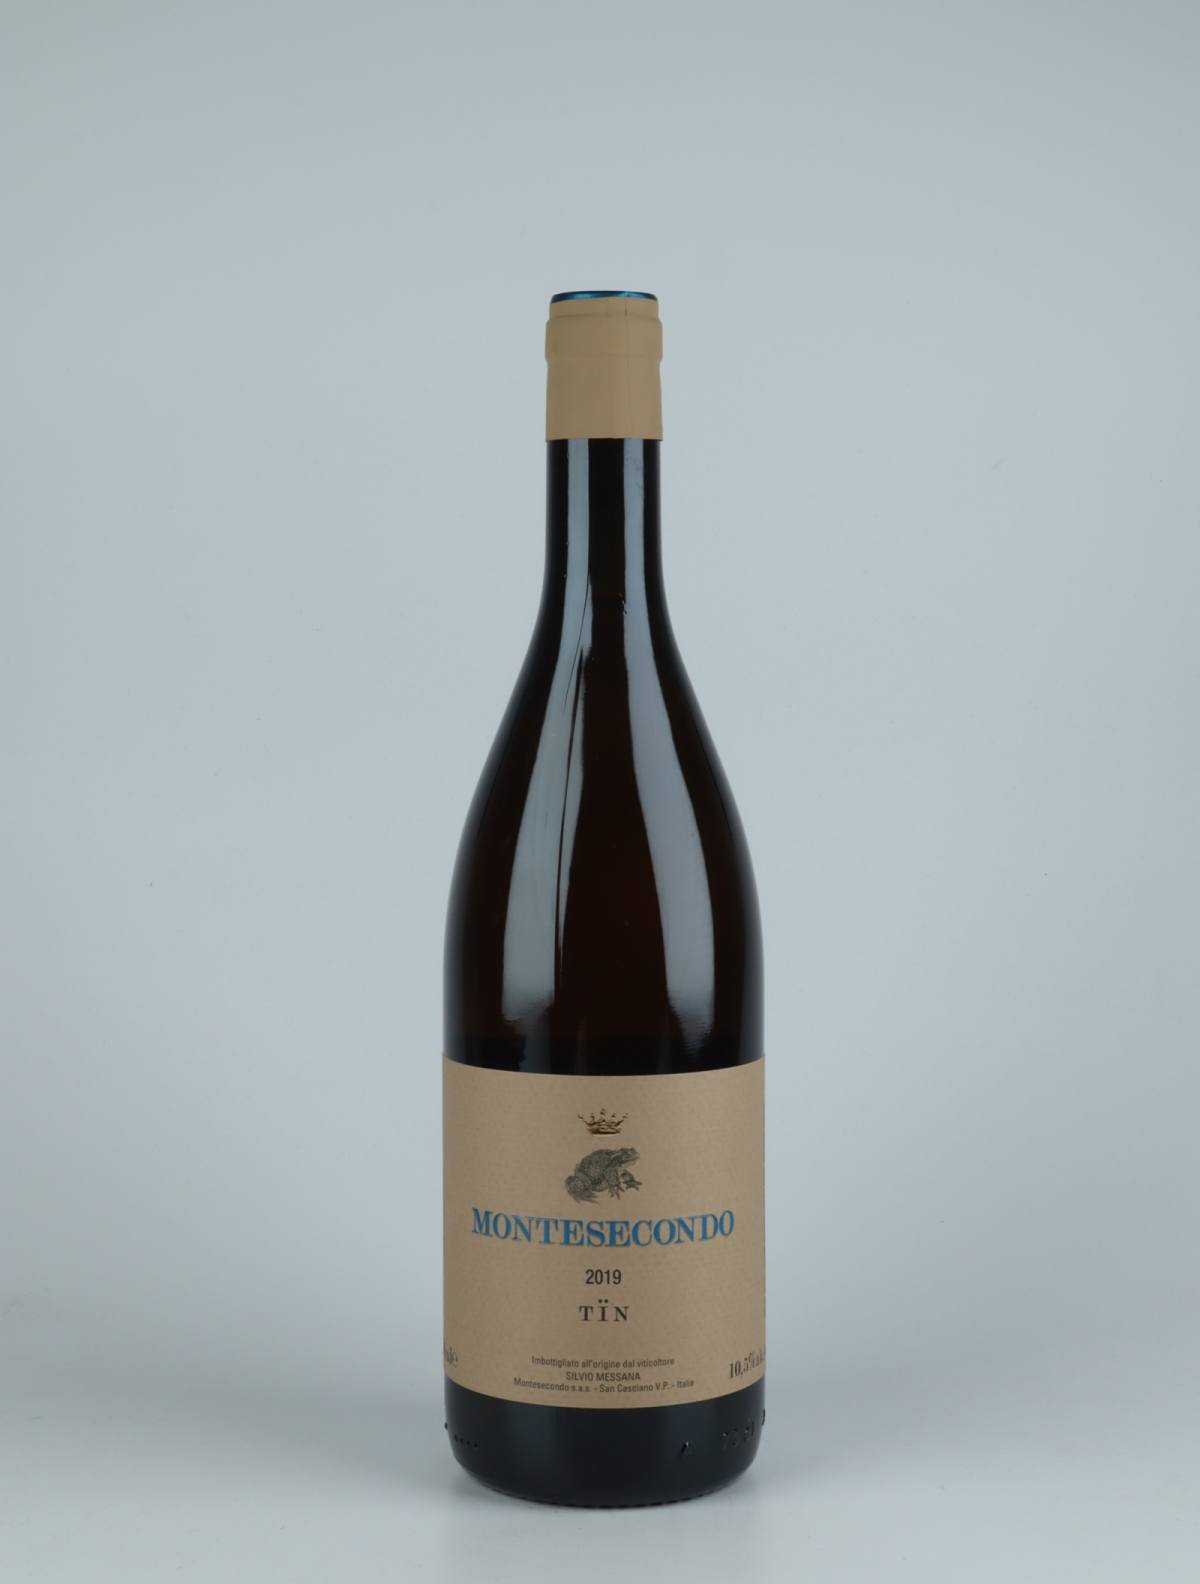 En flaske 2019 Tïn - Trebbiano Orange vin fra Montesecondo, Toscana i Italien